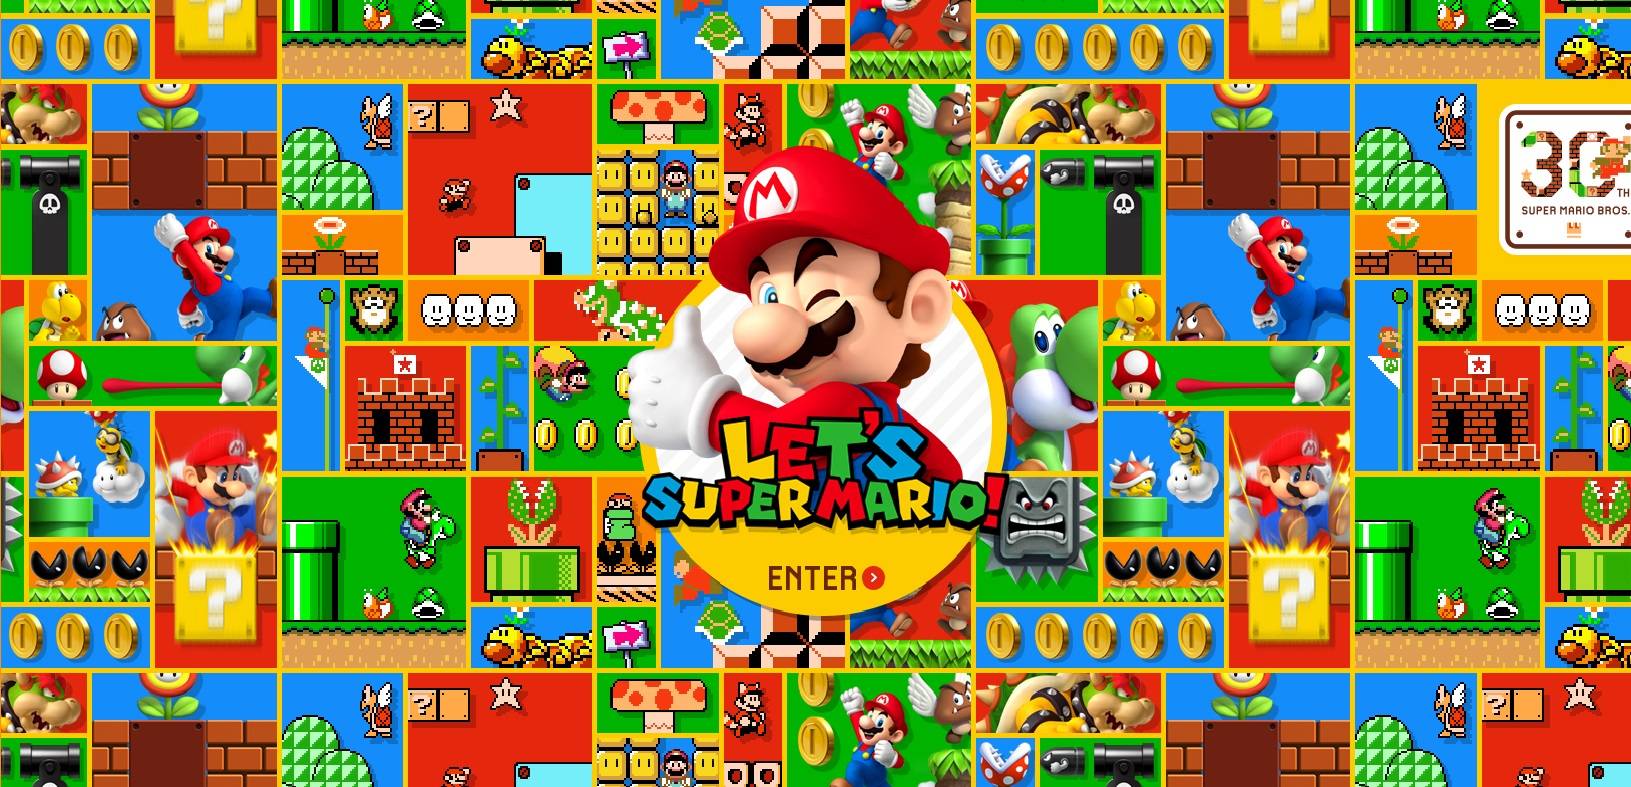 Ultra Super Mario High Resolution Wallpaper for desktop and mobile